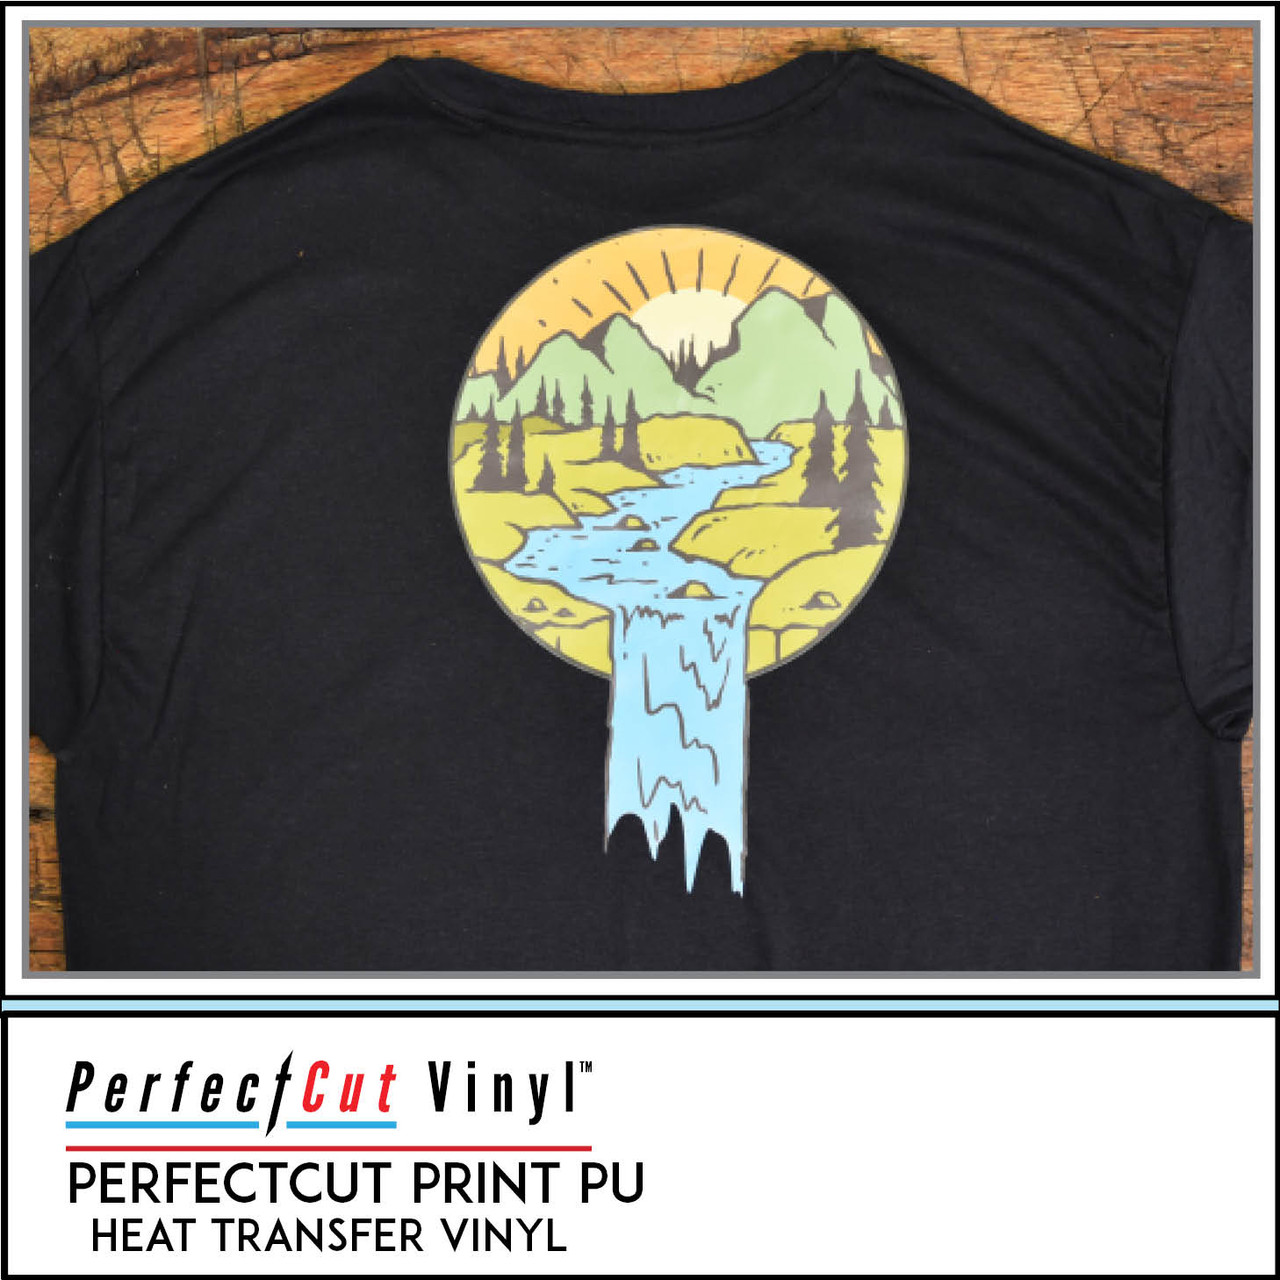 Buy Print PU Heat Transfer Vinyl For Garments